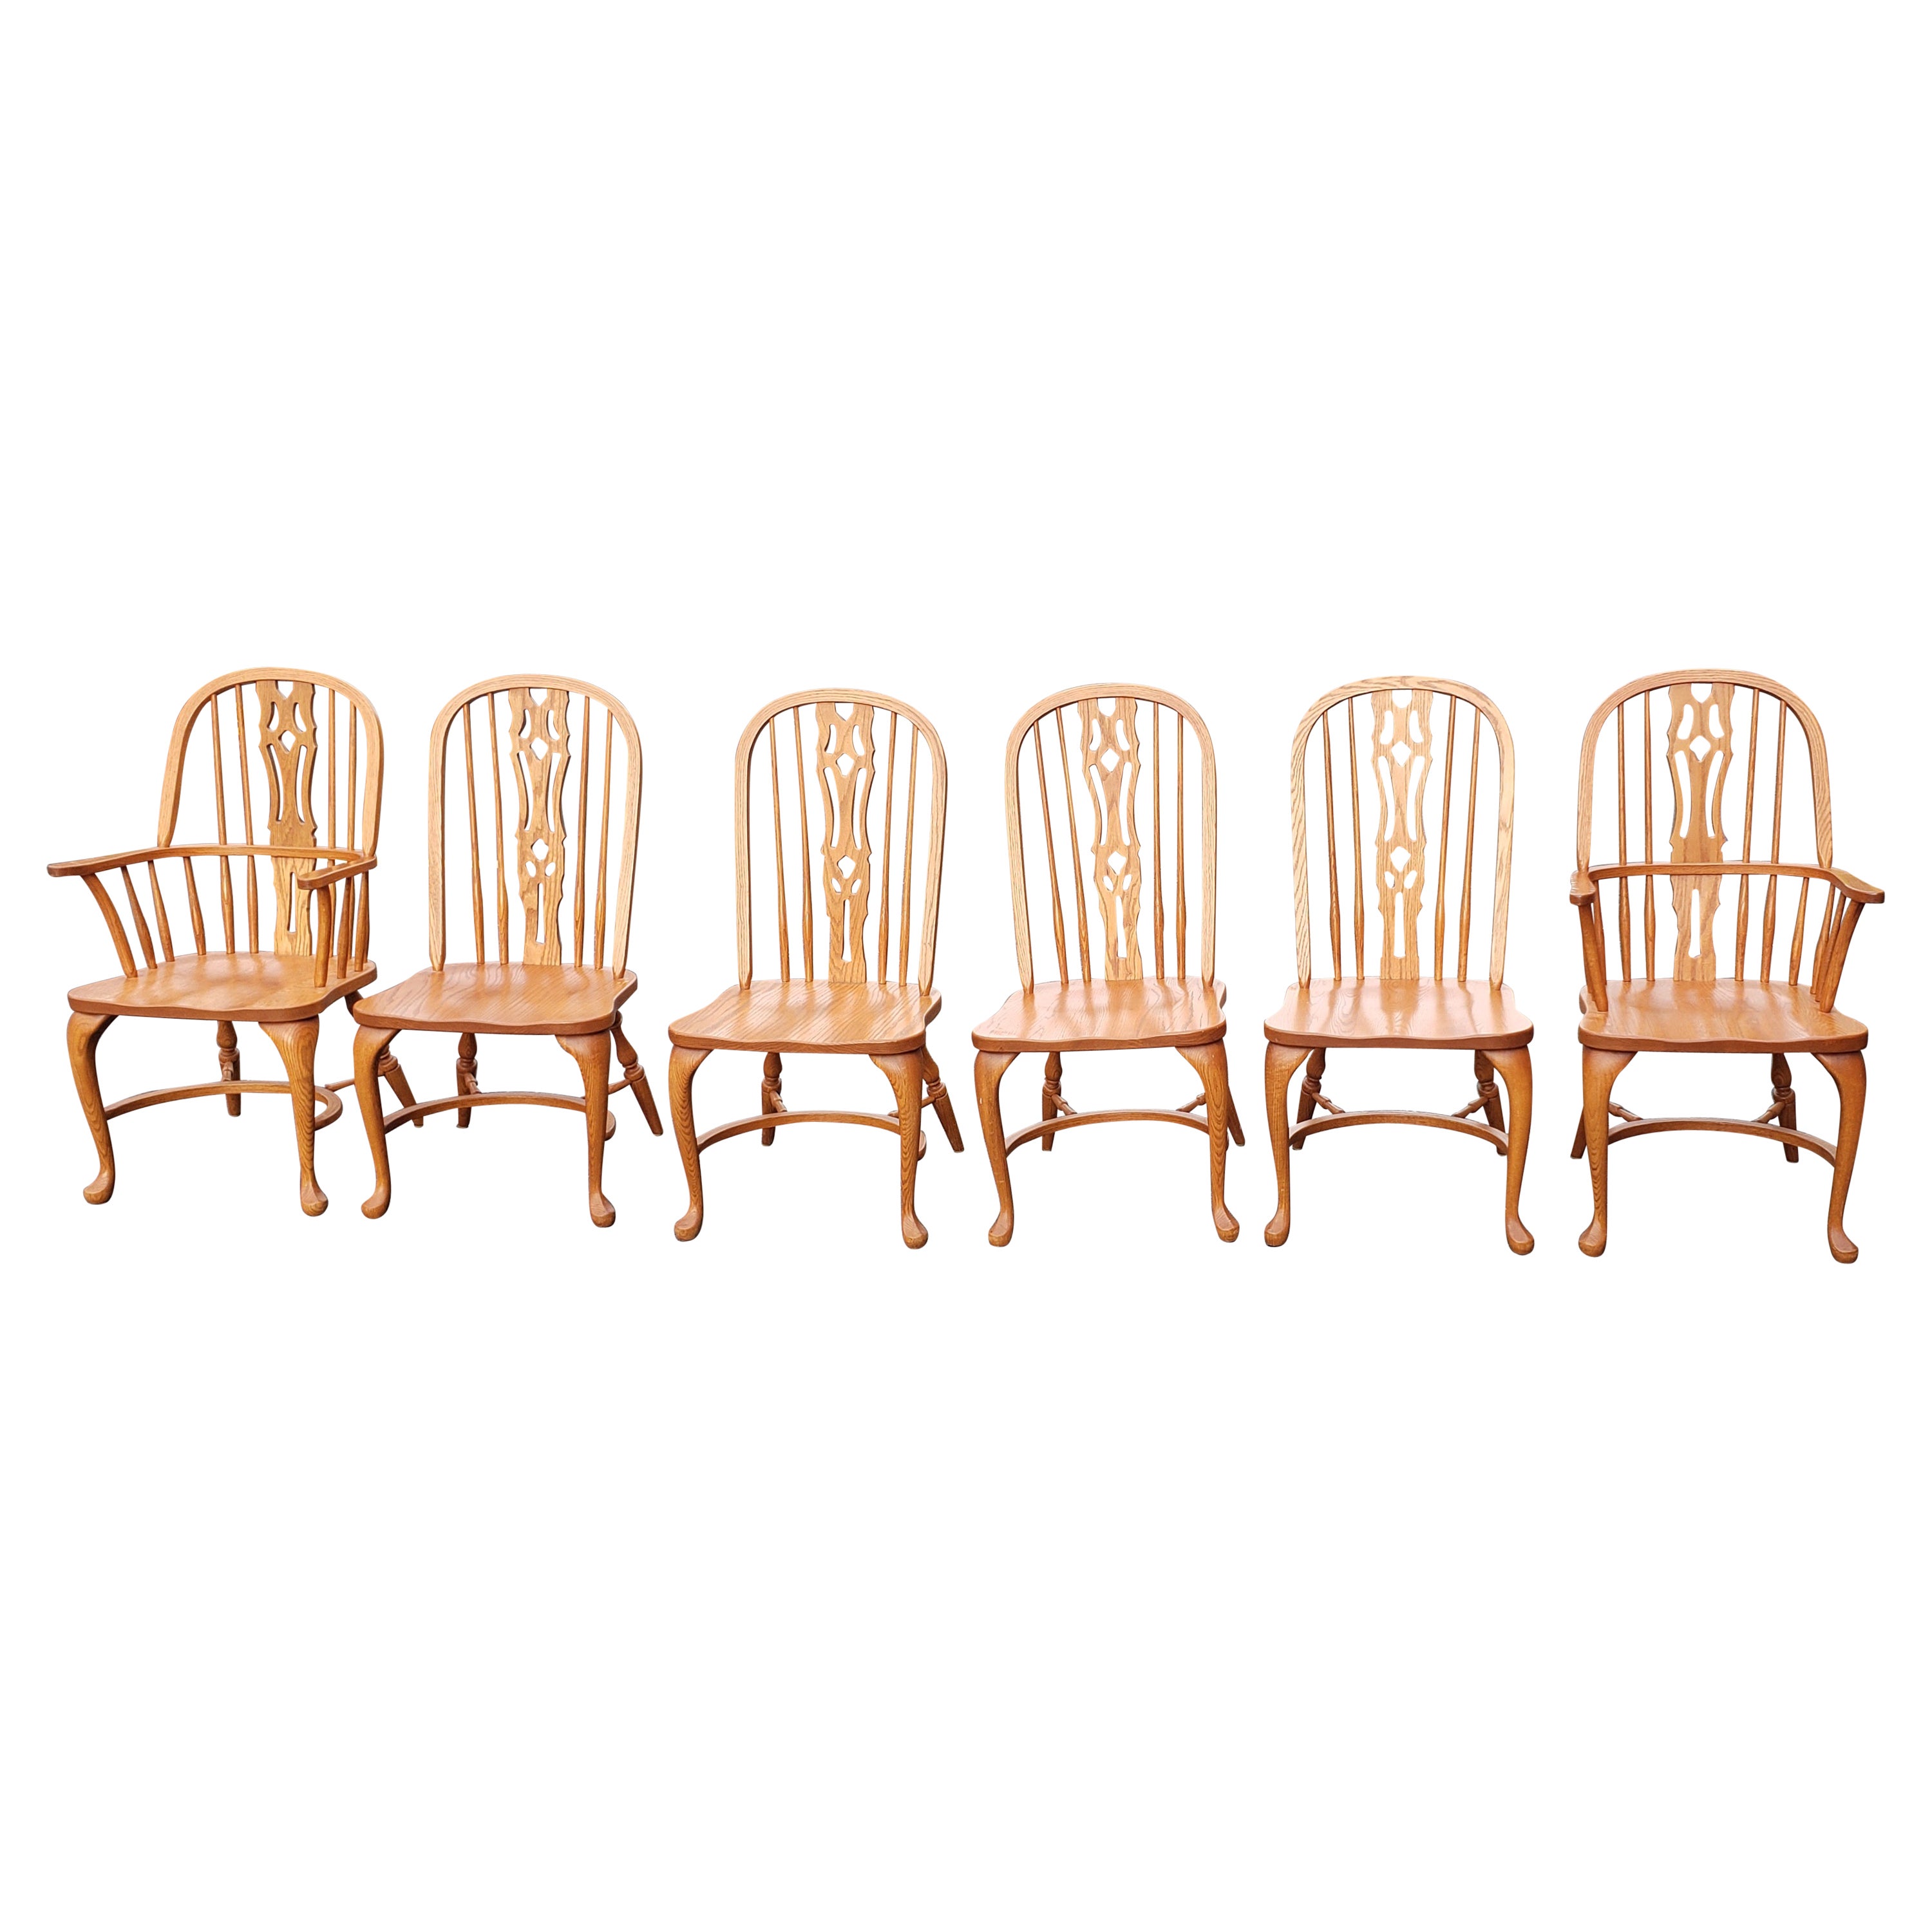 Ensemble de 6 chaises Windsor en chêne massif Americana Arts and Crafts